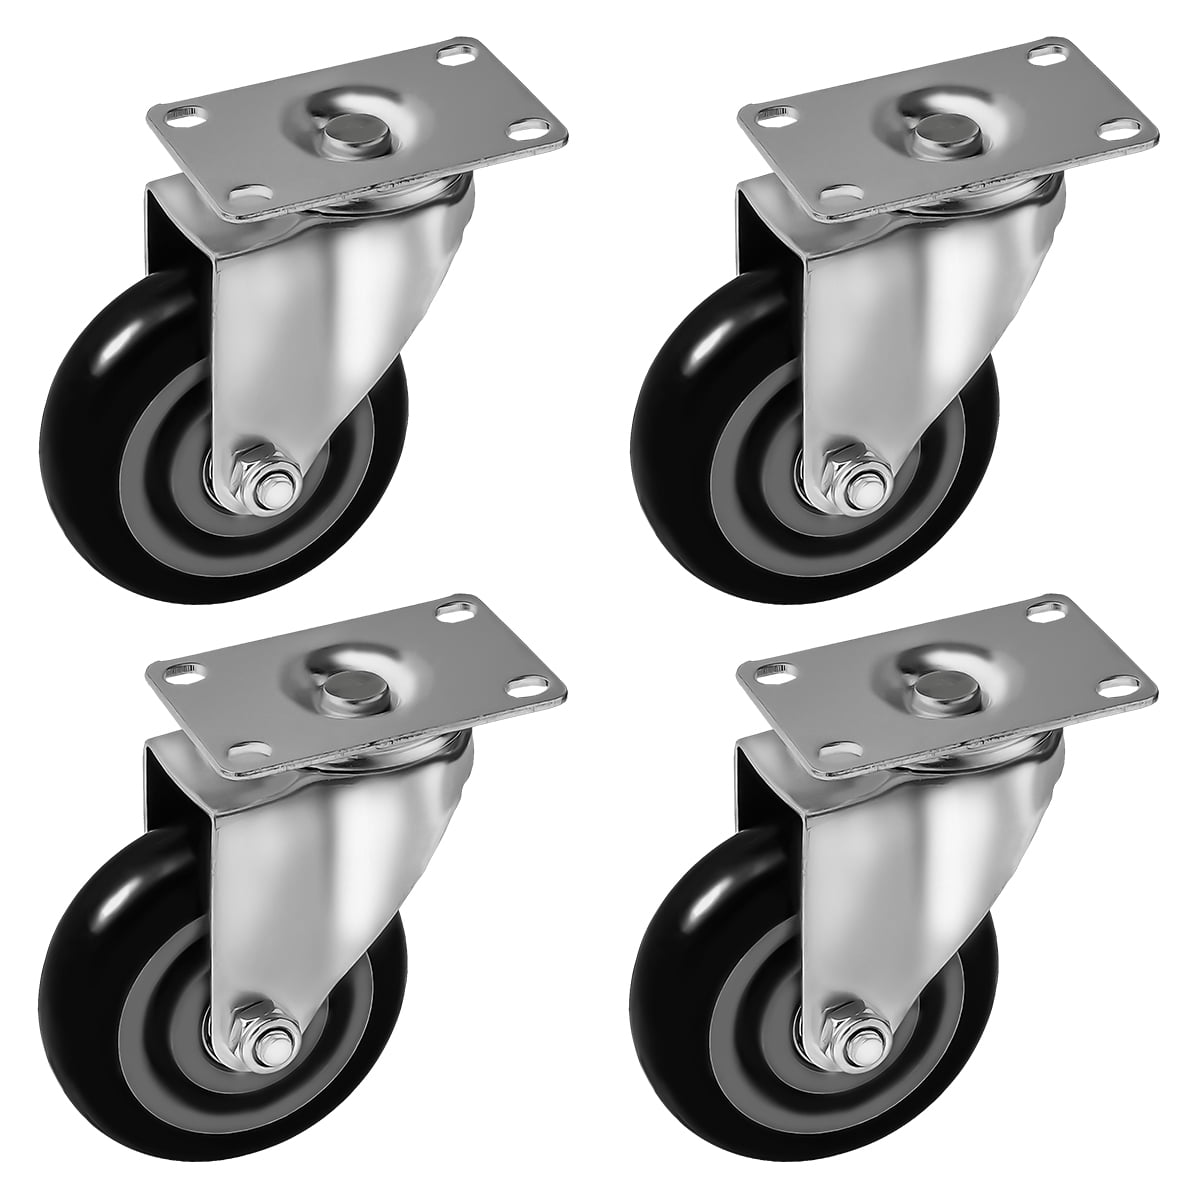 3" Caster Wheels Swivel Plate Casters On Grey PU Wheels Combo Lot of 4 